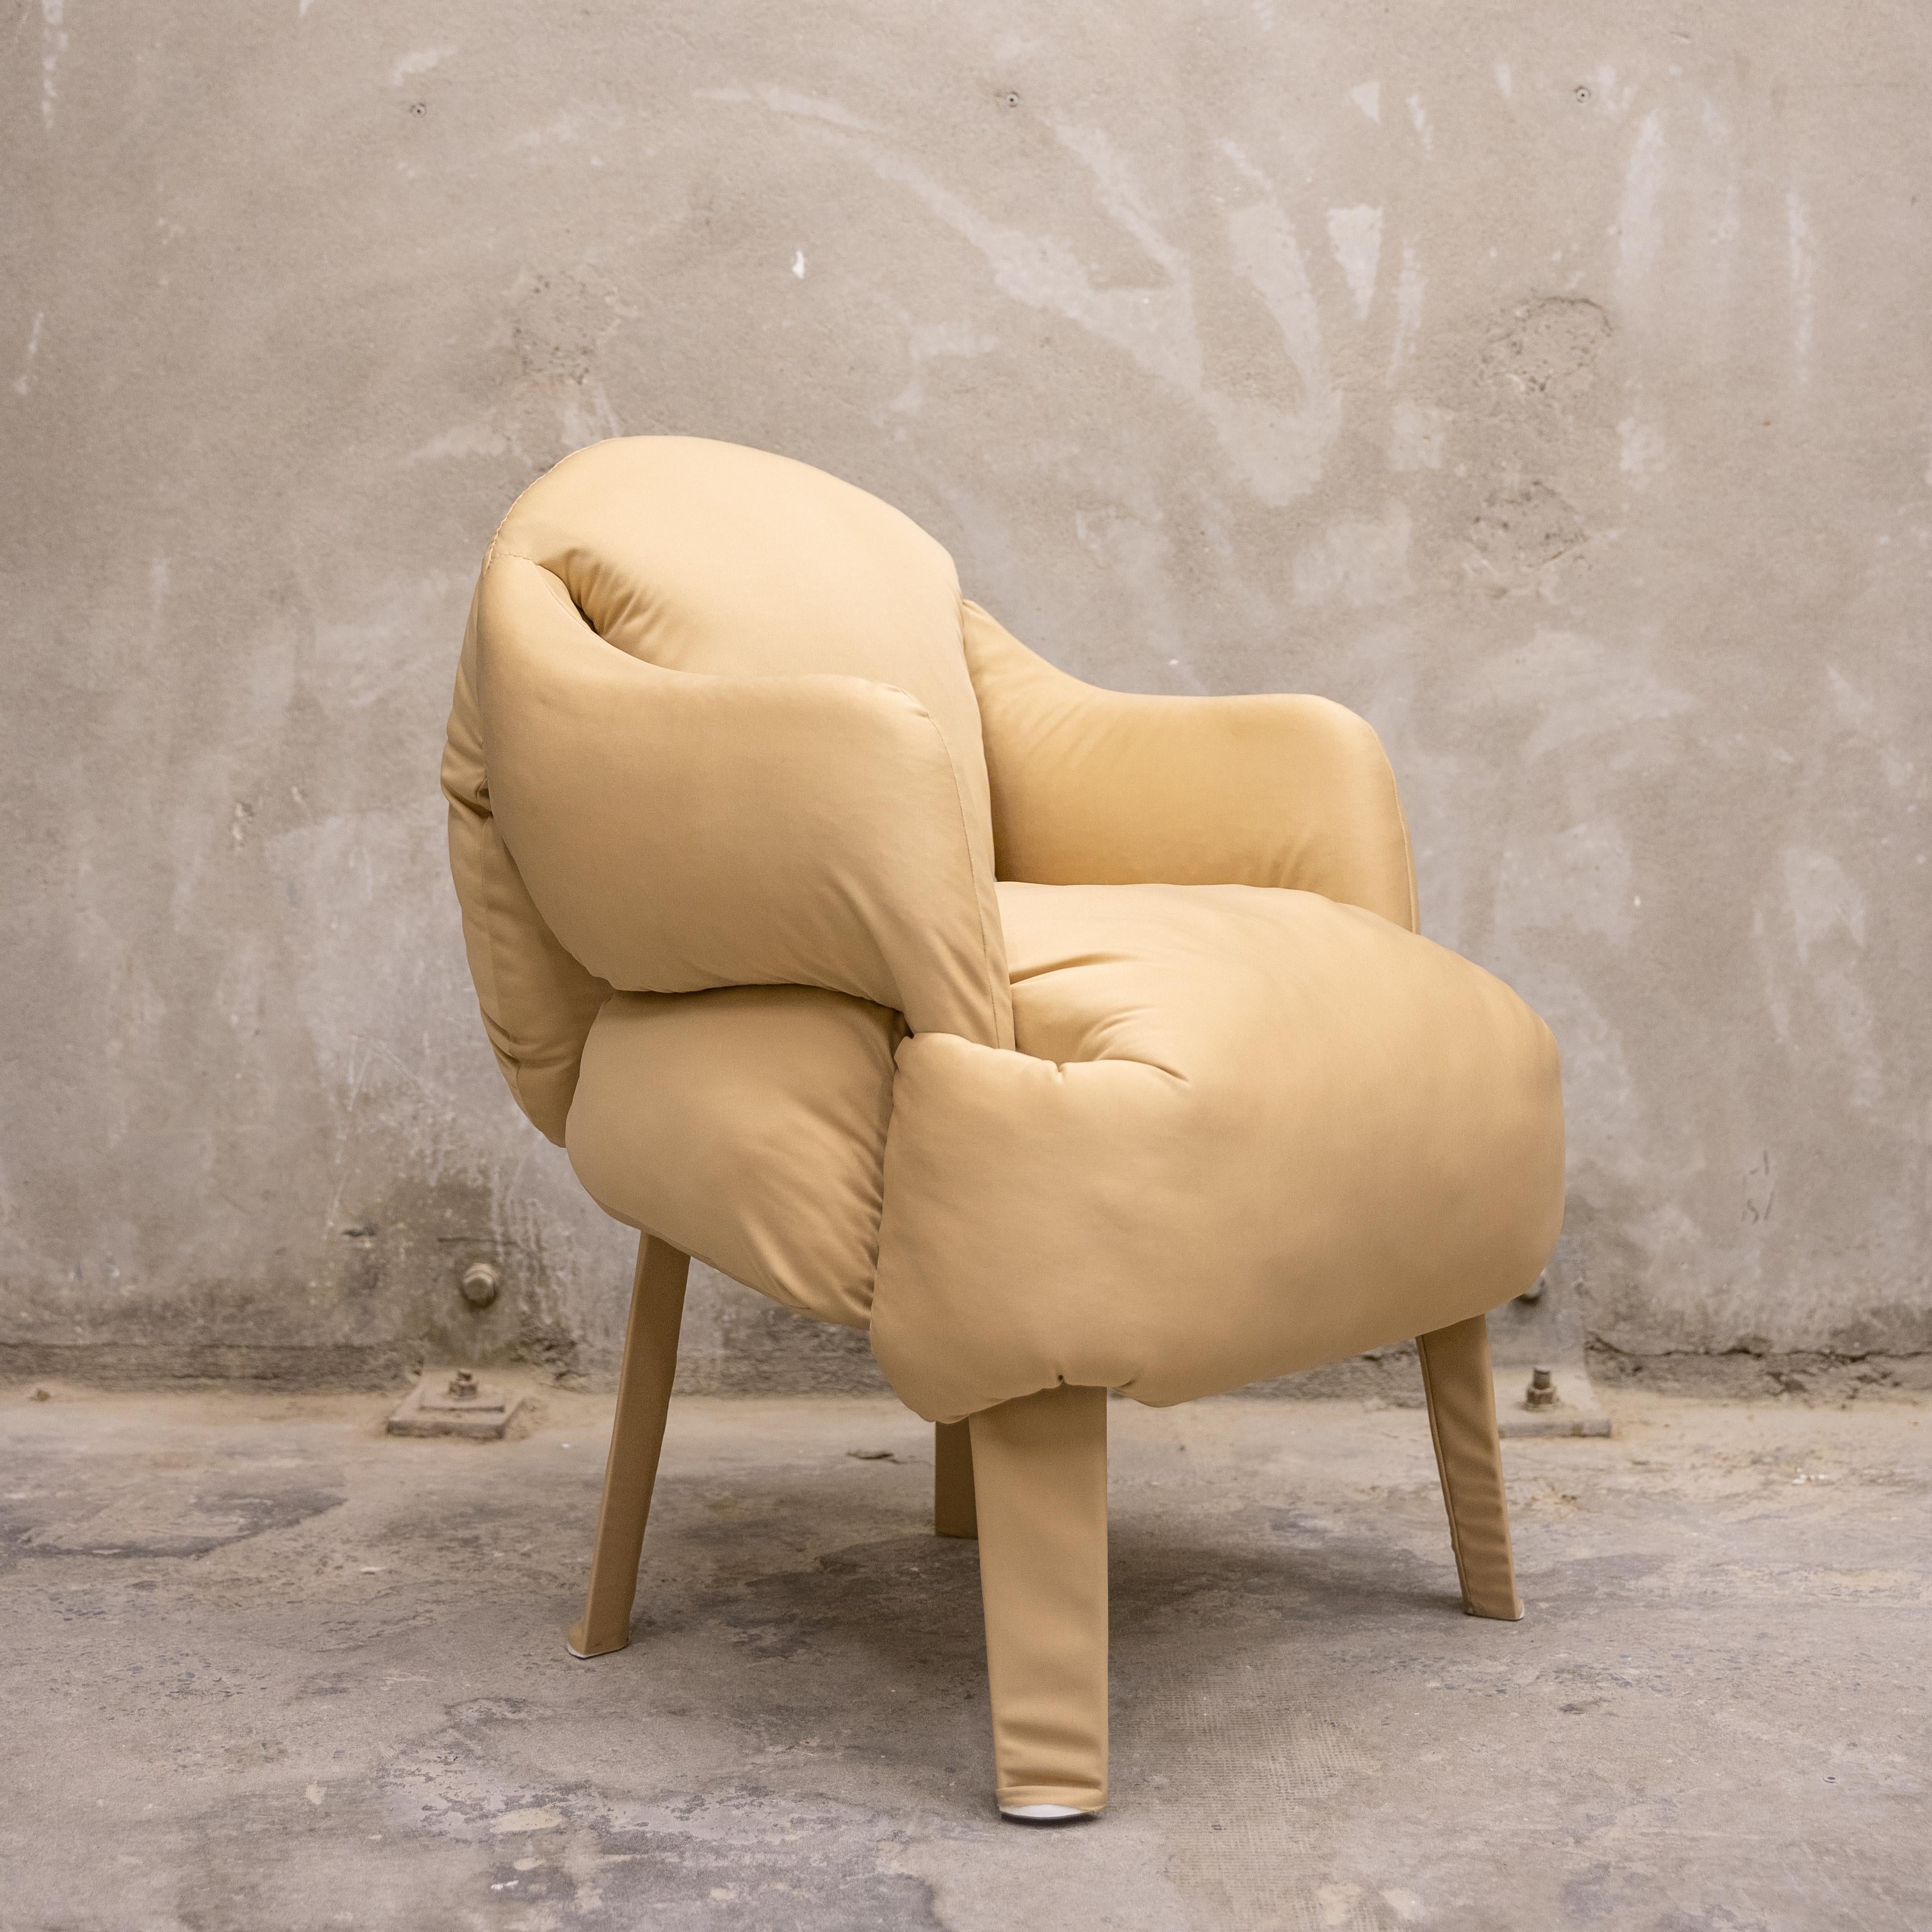 monobloc chair dimensions